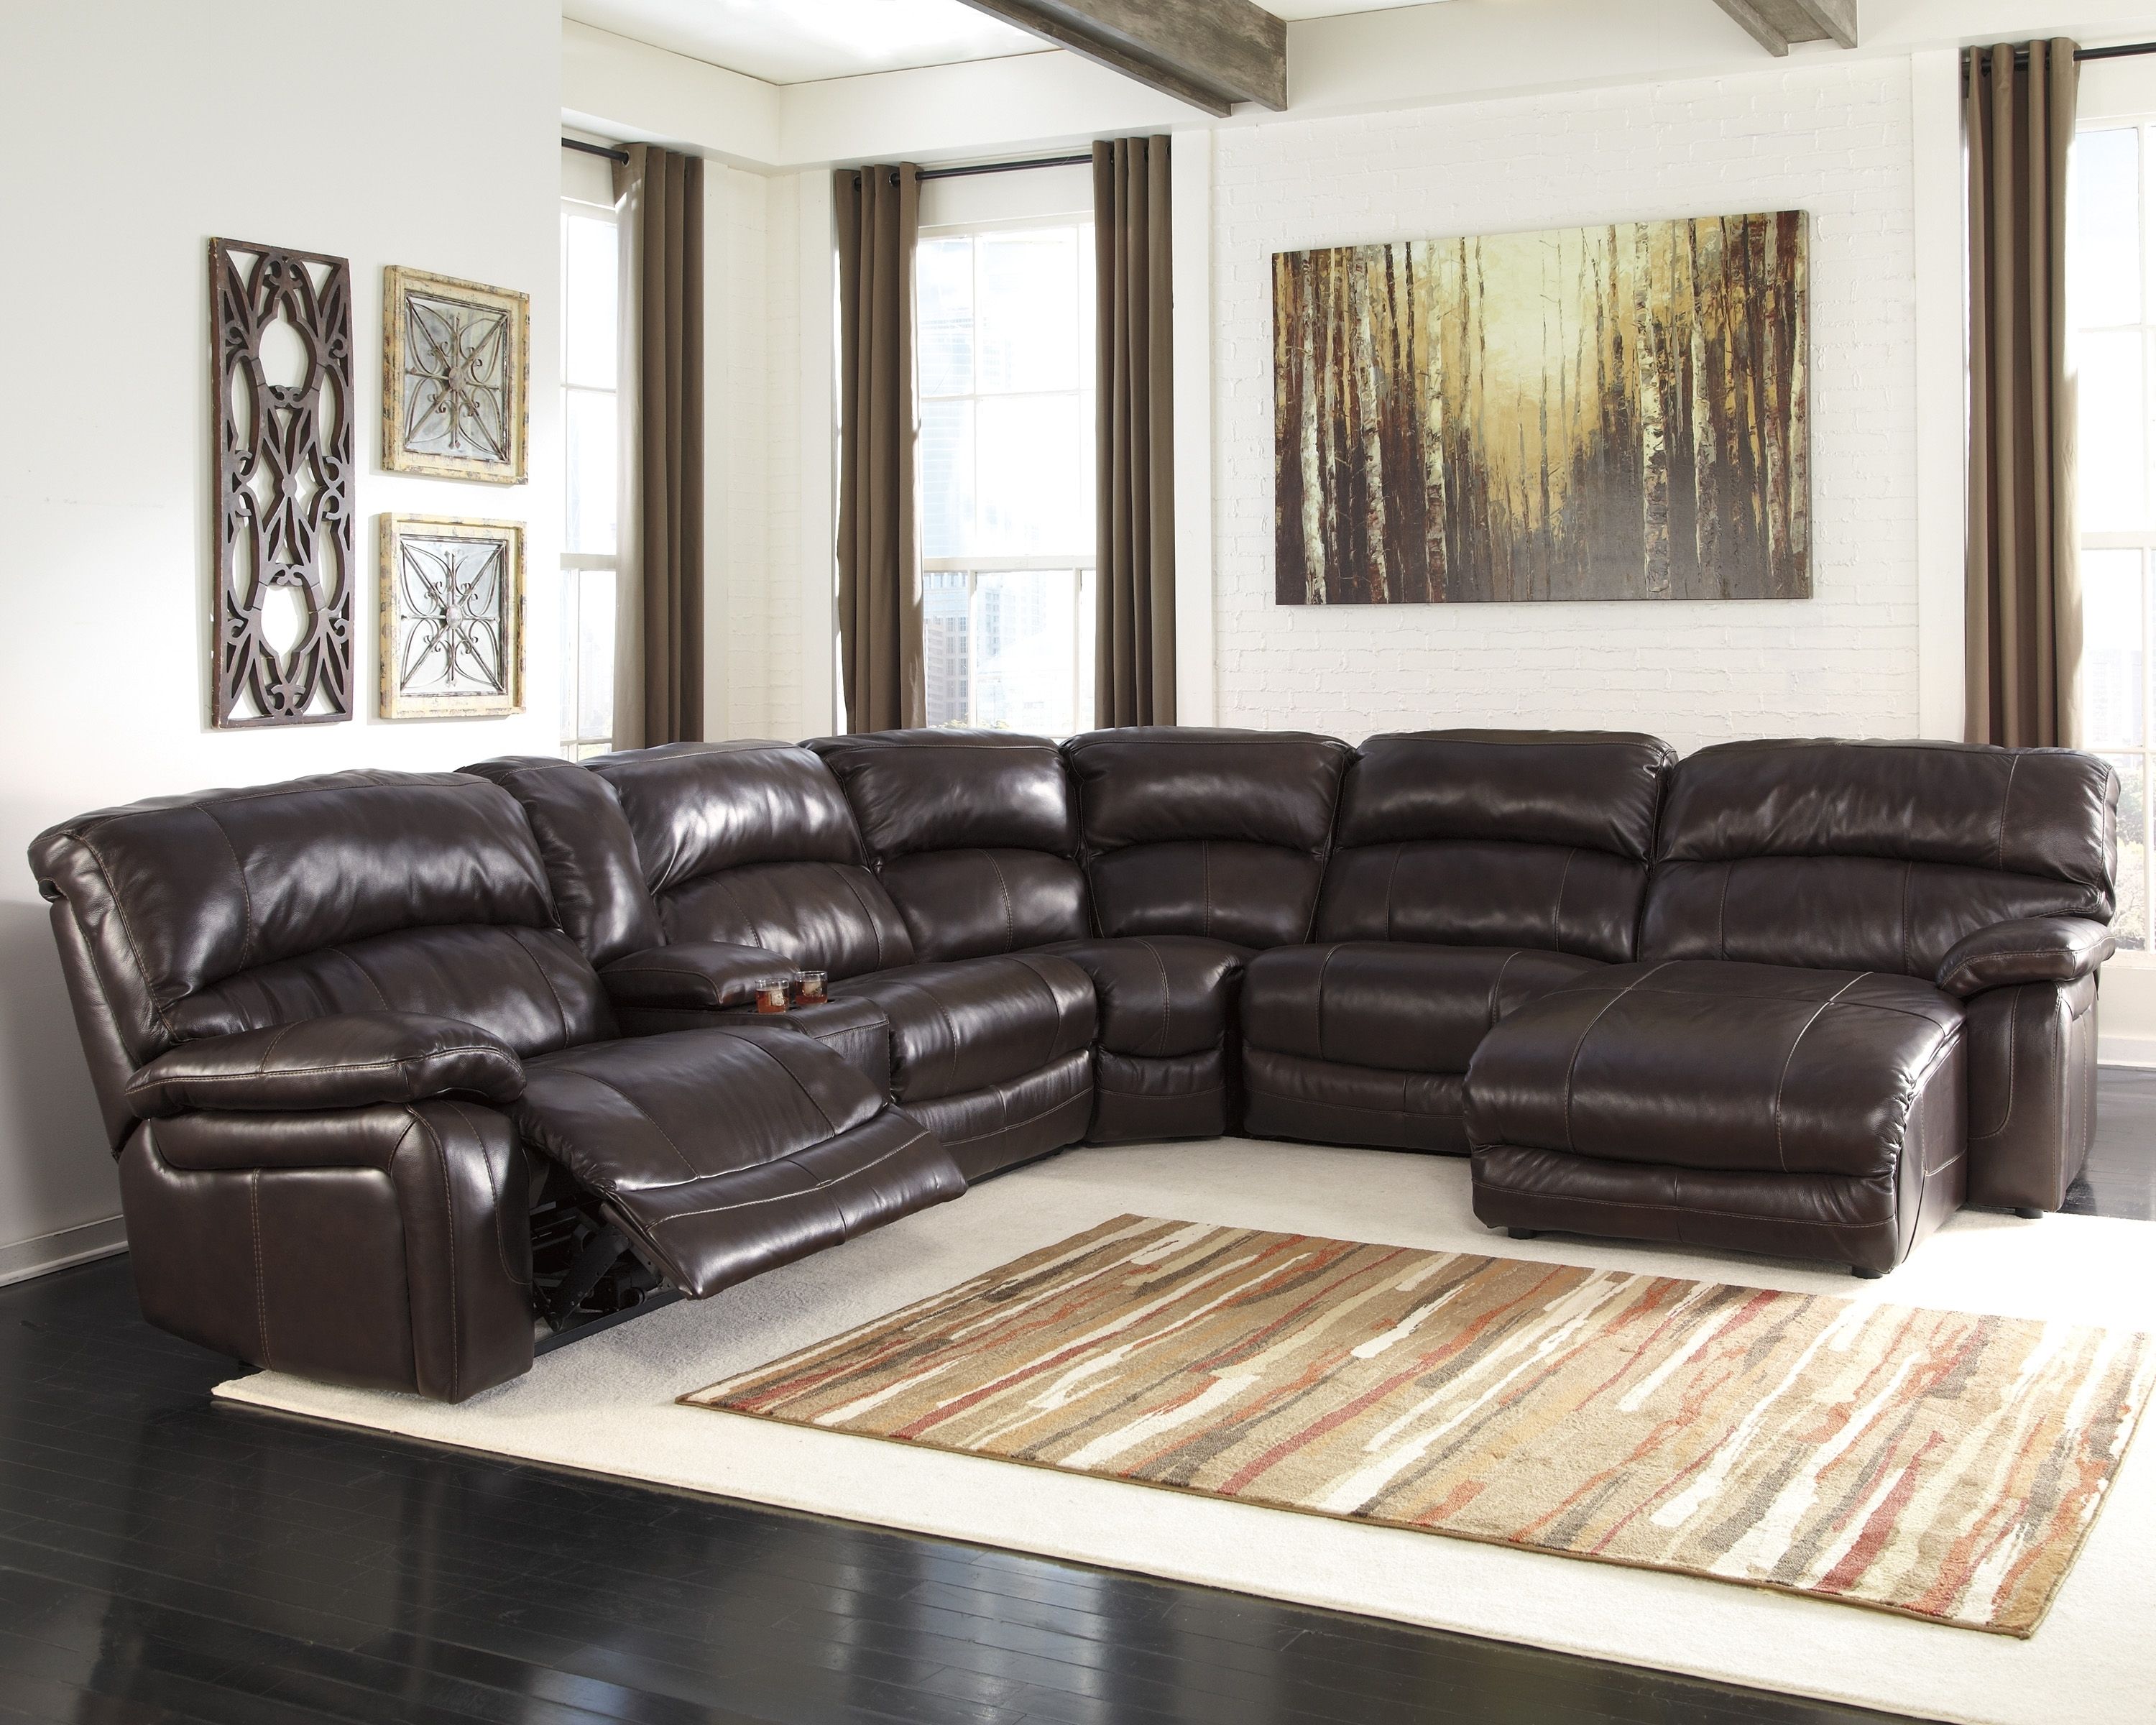 Gallery Craftsman Sectional Sofa – Mediasupload Intended For Craftsman Sectional Sofas (View 7 of 10)